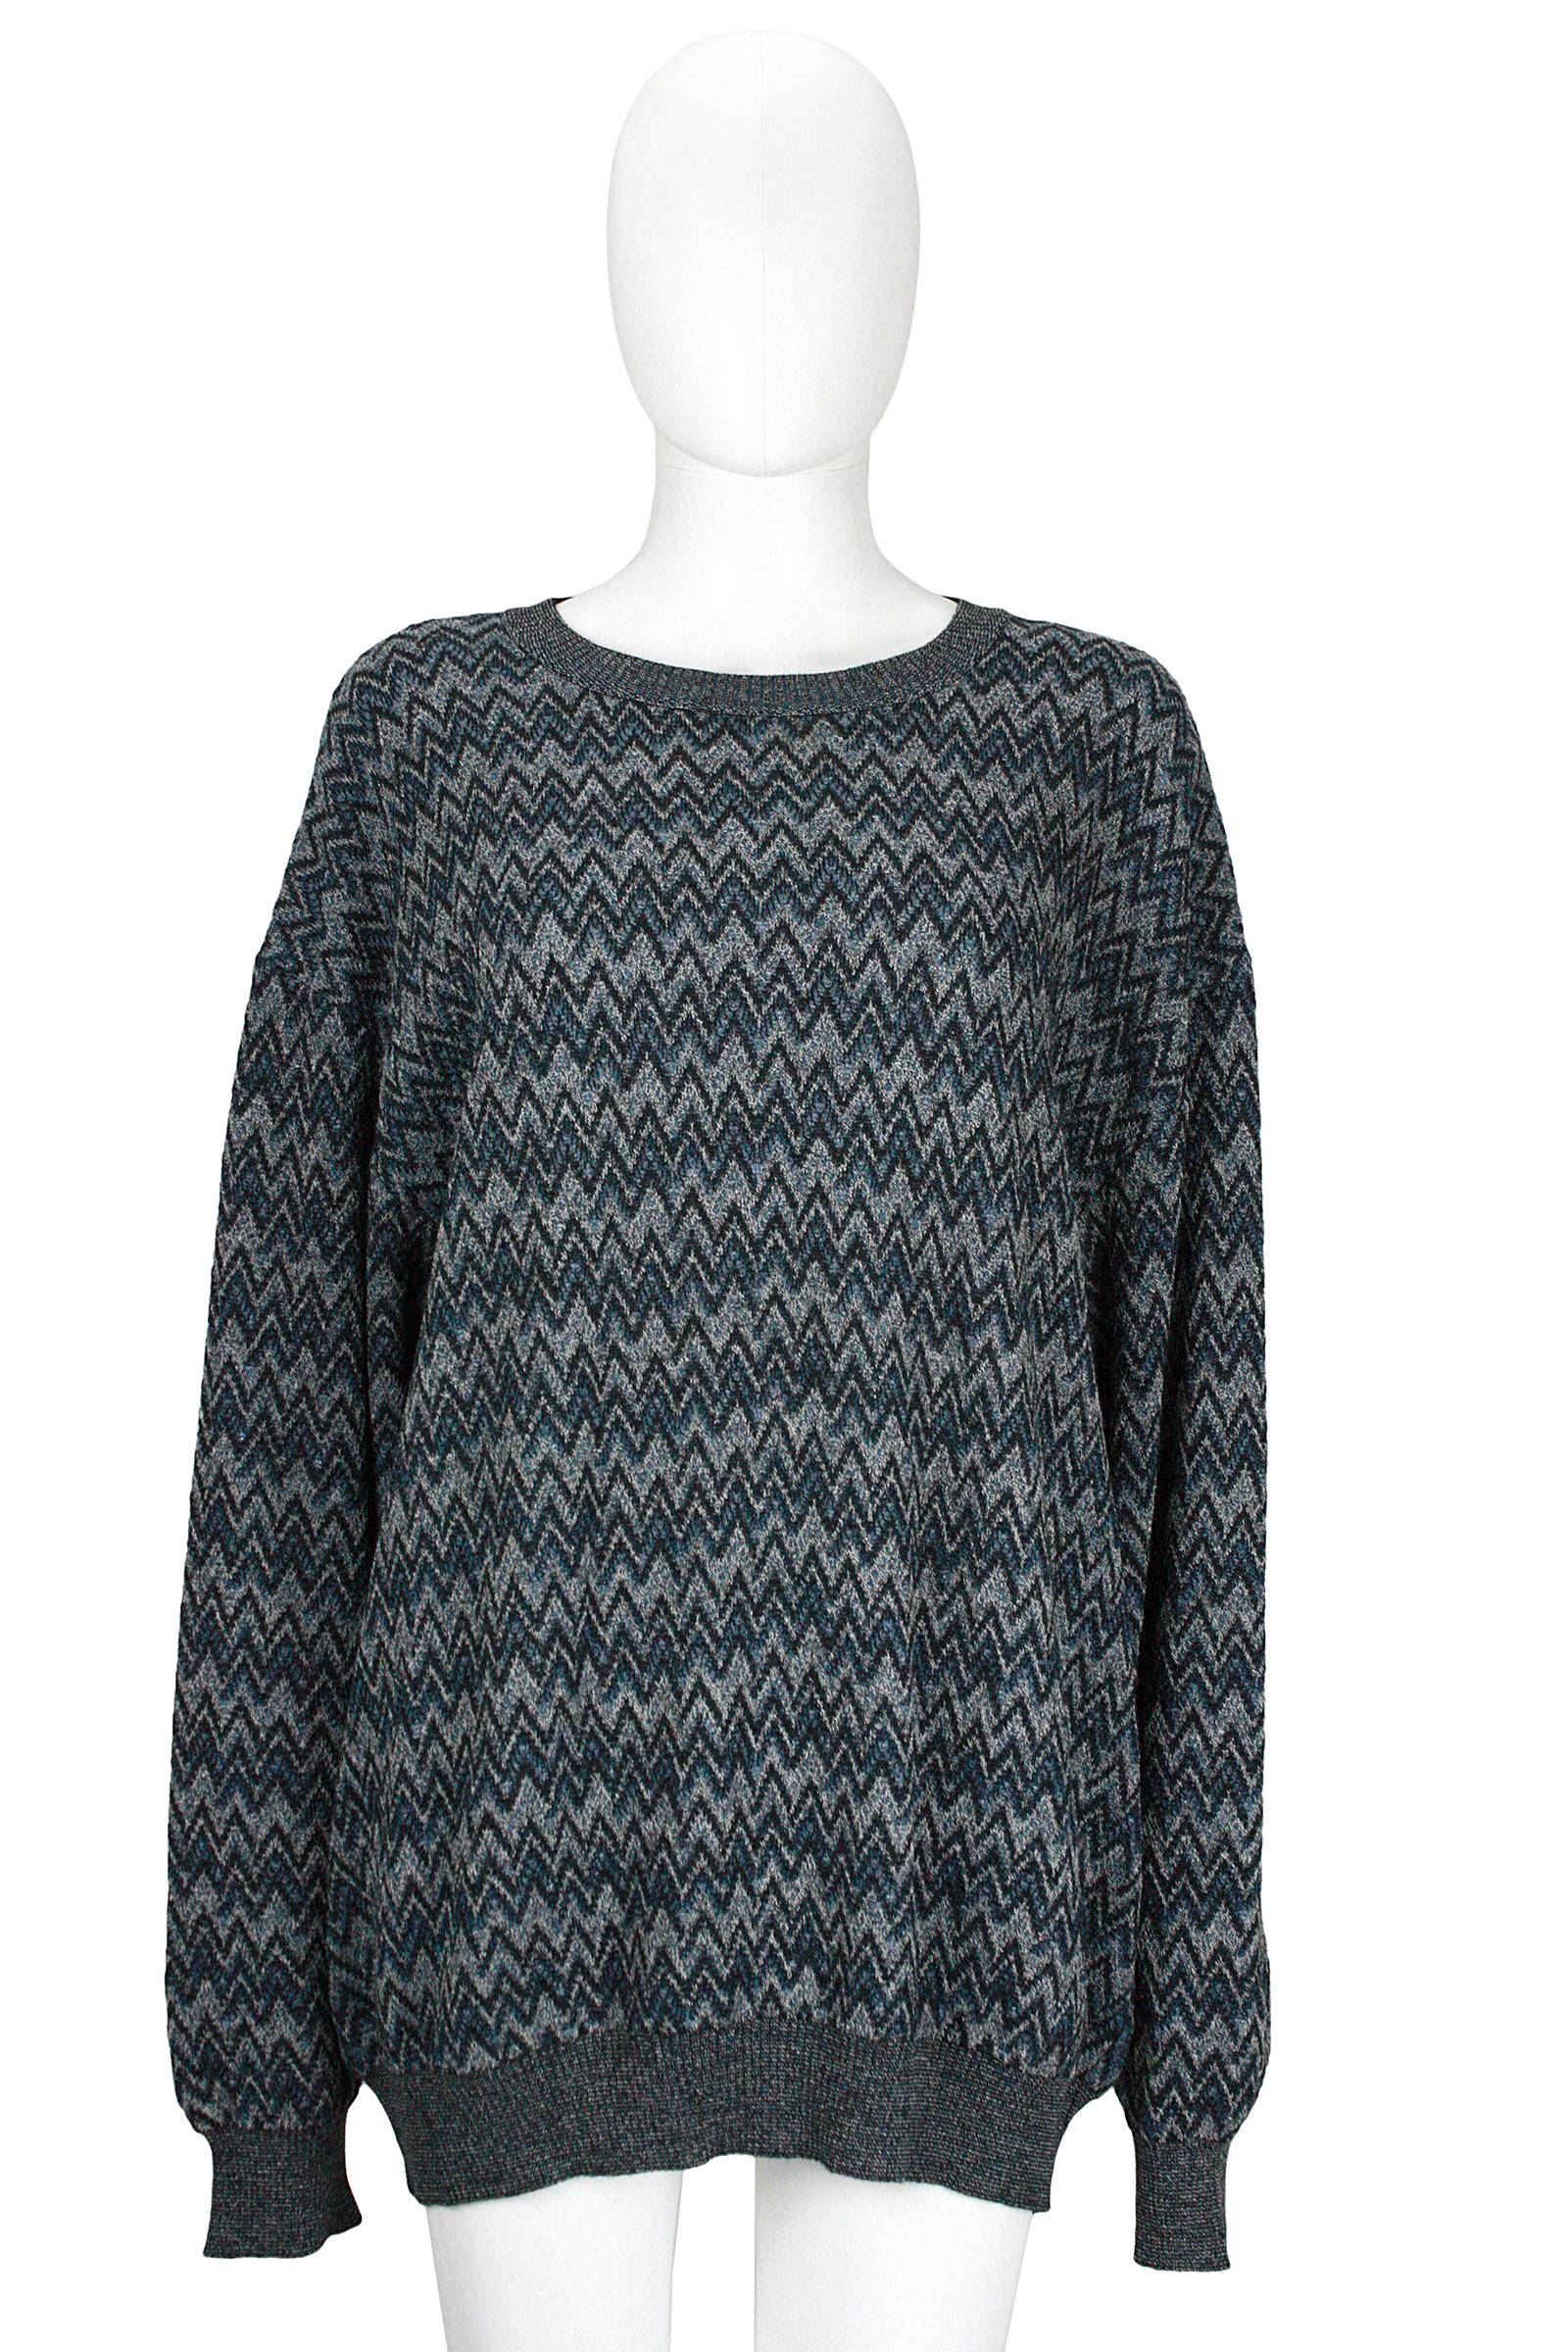 Missoni 
Knit sweater 
Knit stripe trim 
Crew neck 
Light weave that stretches 
Wool blend
Blue grey black zigzag pattern